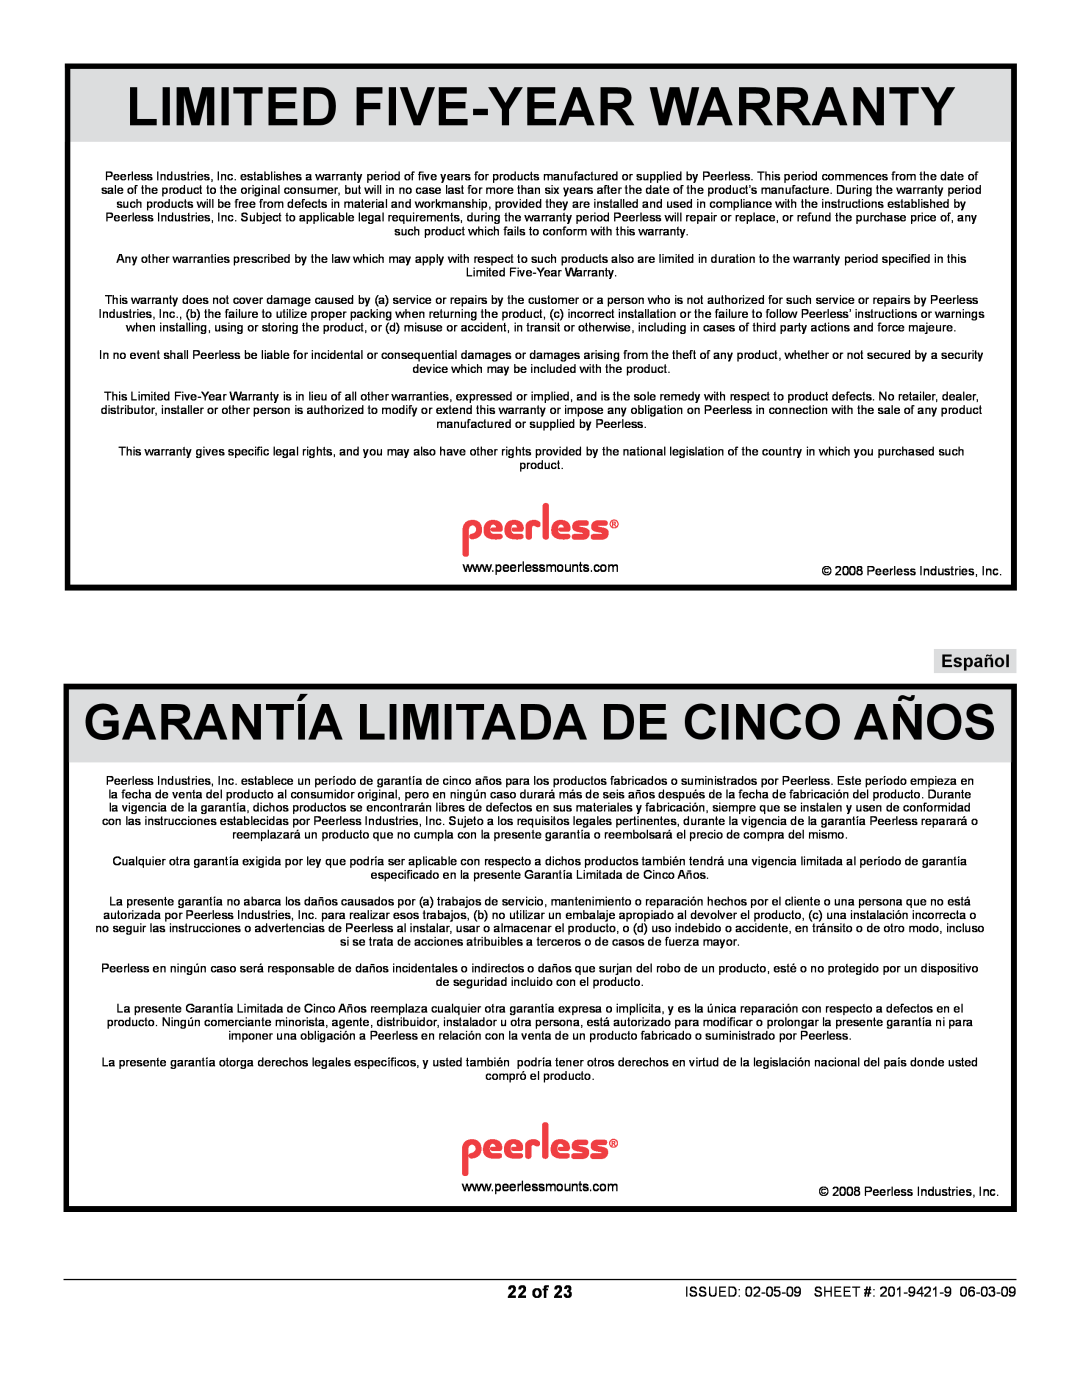 Peerless Industries ST630P-S manual Limited Five-Yearwarranty, 22 of, Garantía Limitada De Cinco Años, Español 